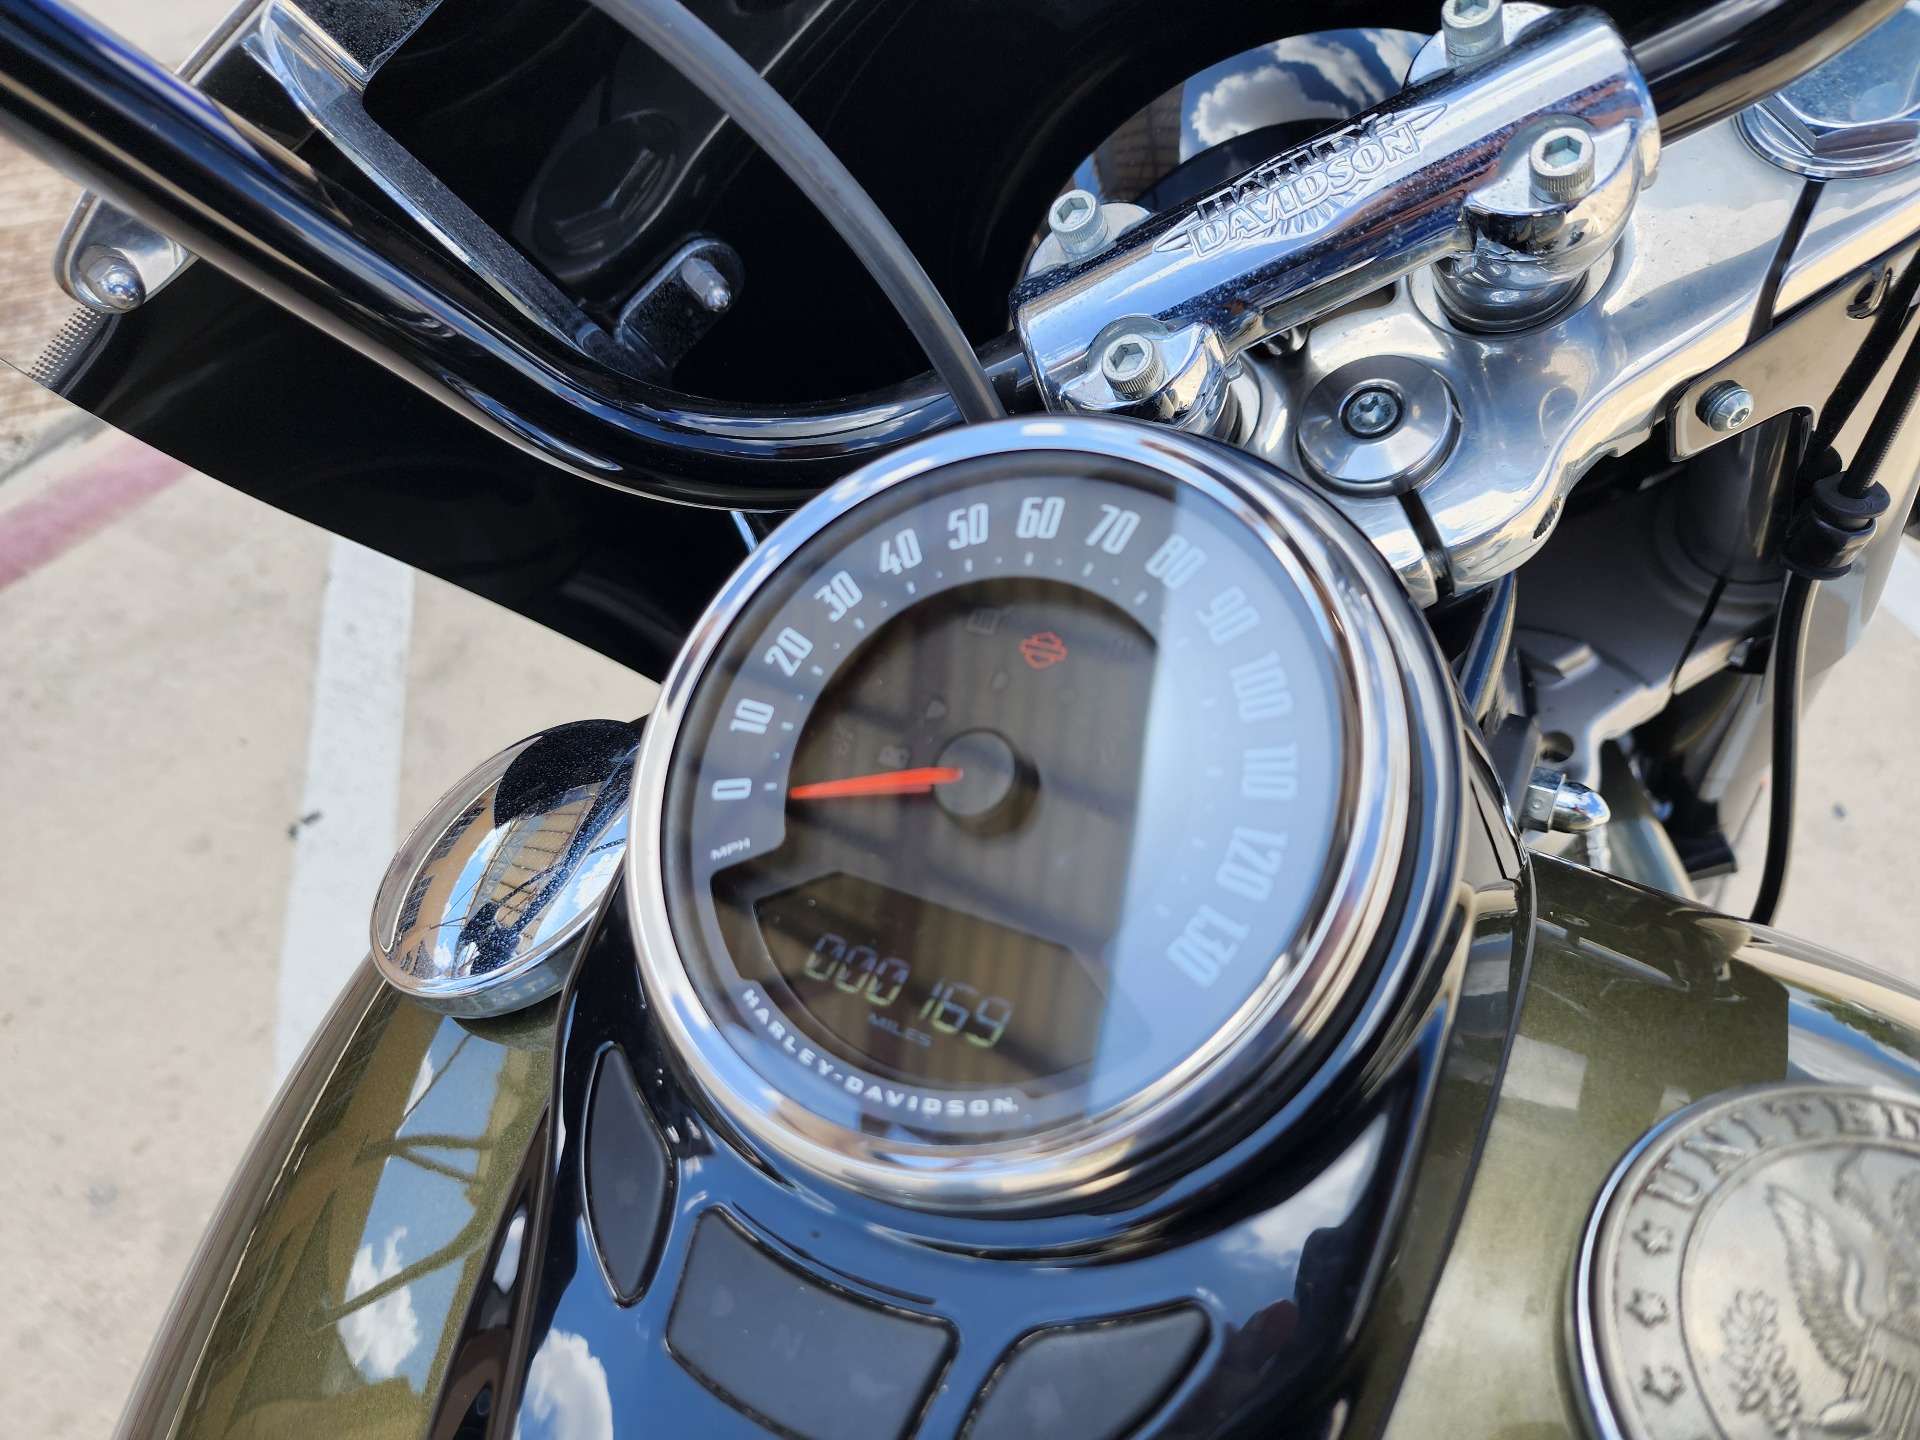 2018 Harley-Davidson Heritage Classic in San Antonio, Texas - Photo 9